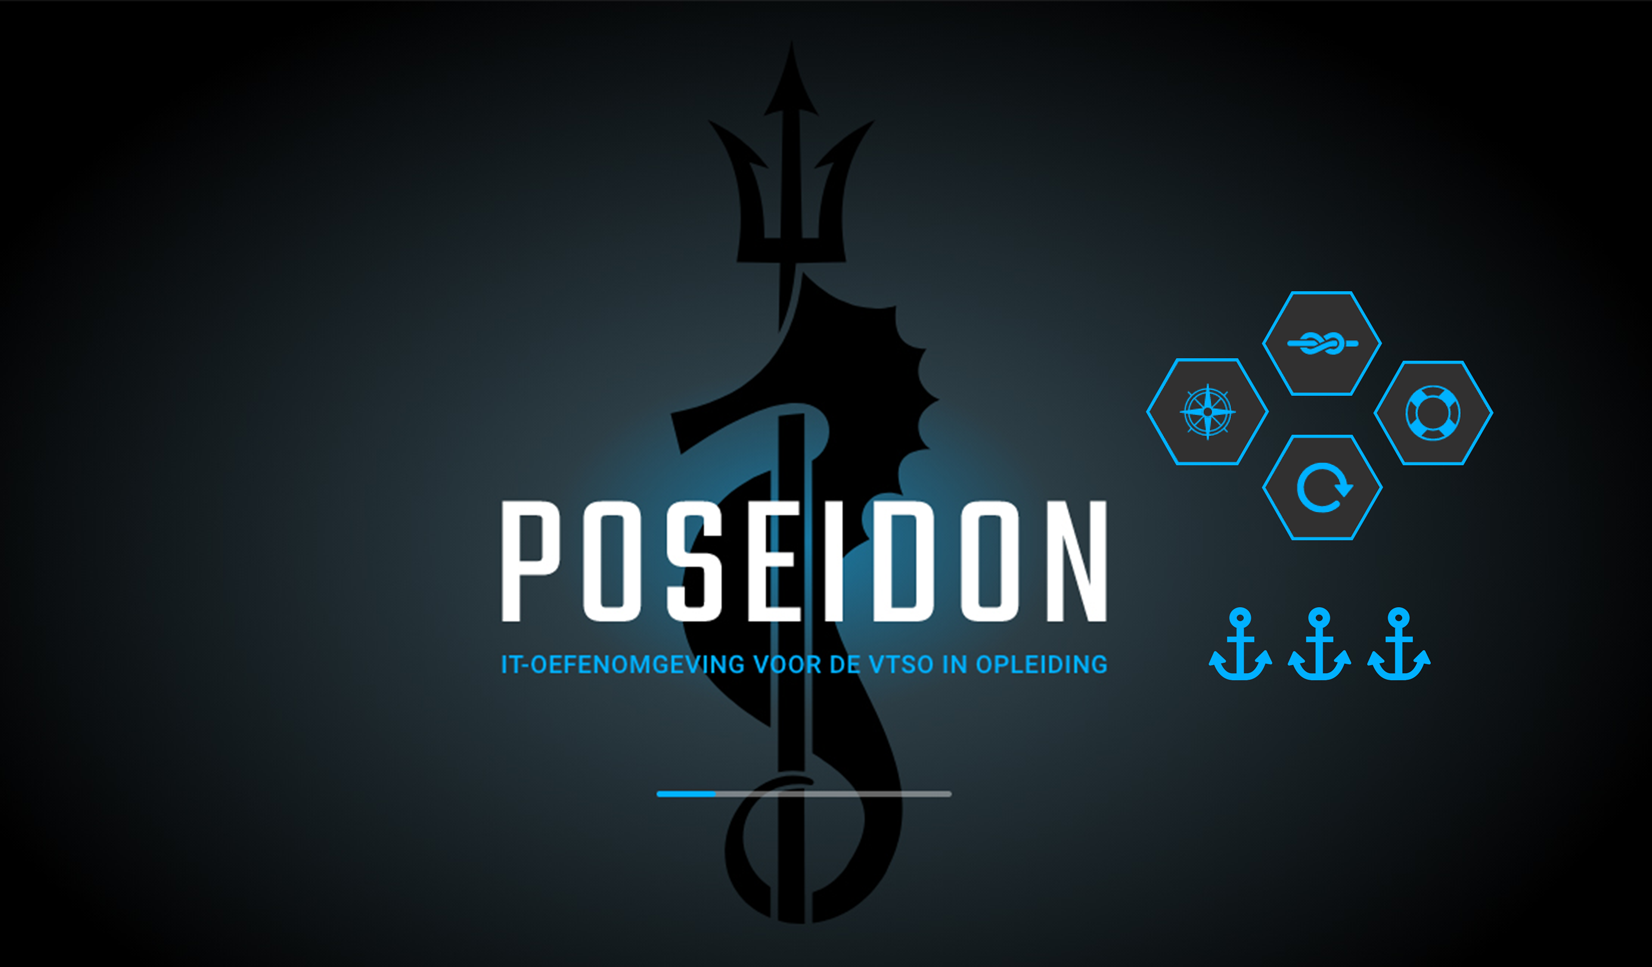 Poseidon IT practice environment